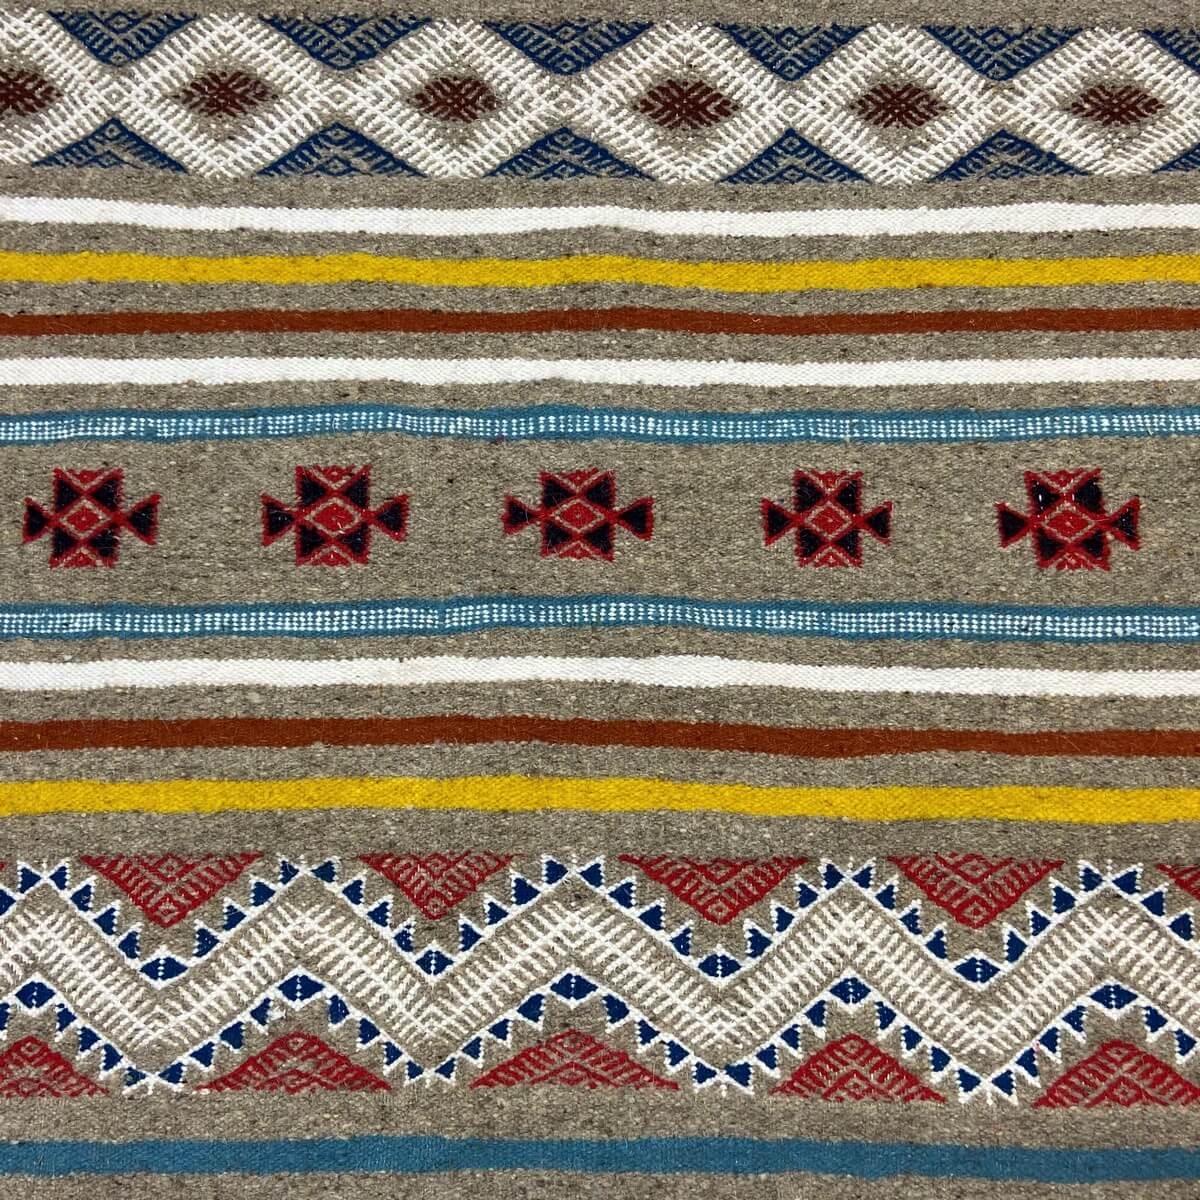 Berber tapijt Tapijt Kilim Luki 110x200 Veelkleurig (Handgeweven, Wol, Tunesië) Tunesisch kilimdeken, Marokkaanse stijl. Rechtho